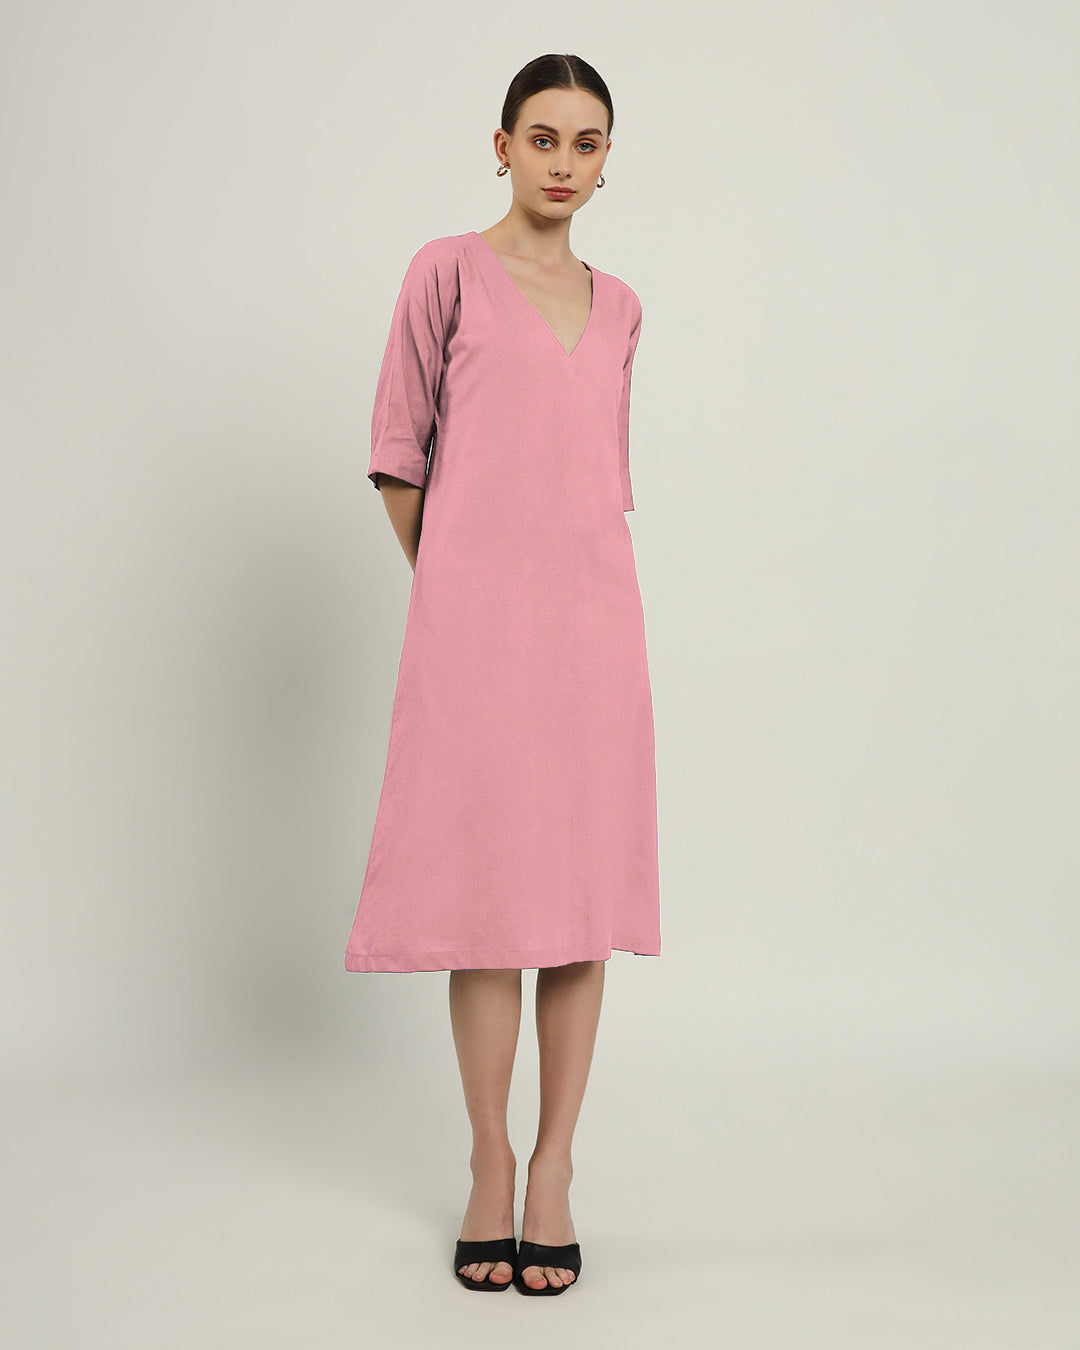 The Mildura Fondant Pink Cotton Dress